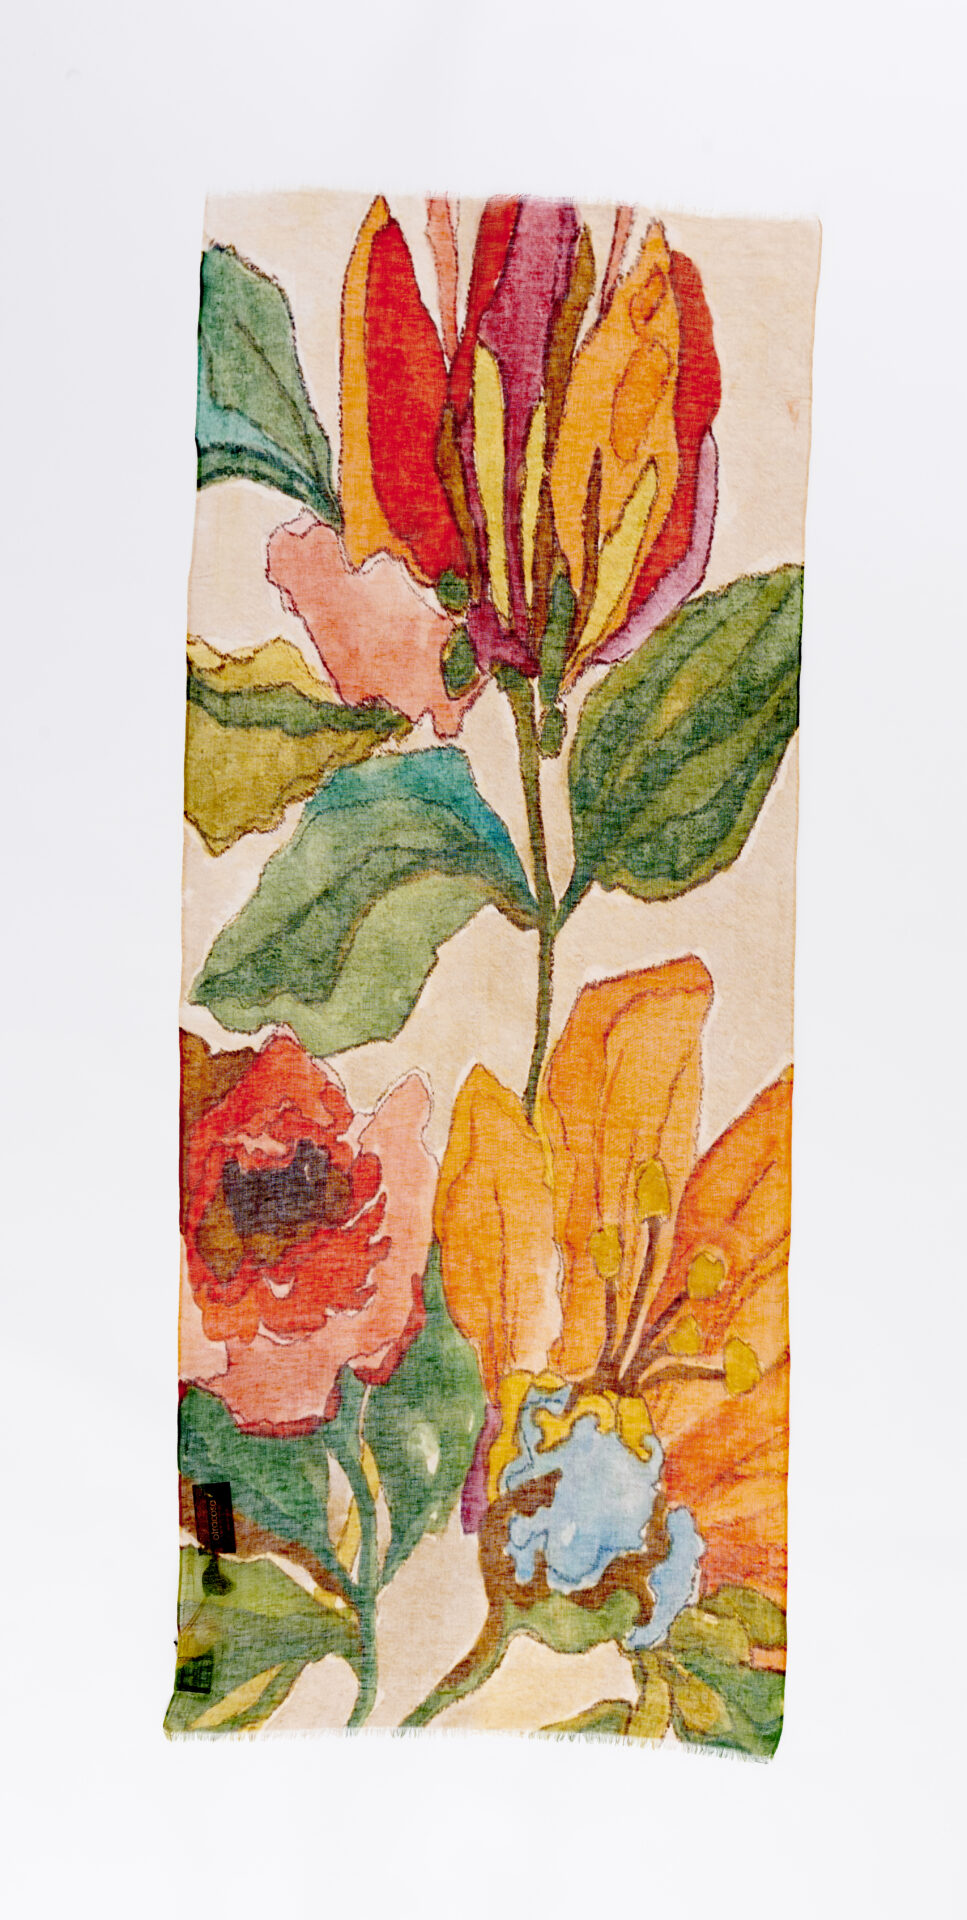 OTRACOSA SHAWL - Linen/Cotton – Watercolor Flowers